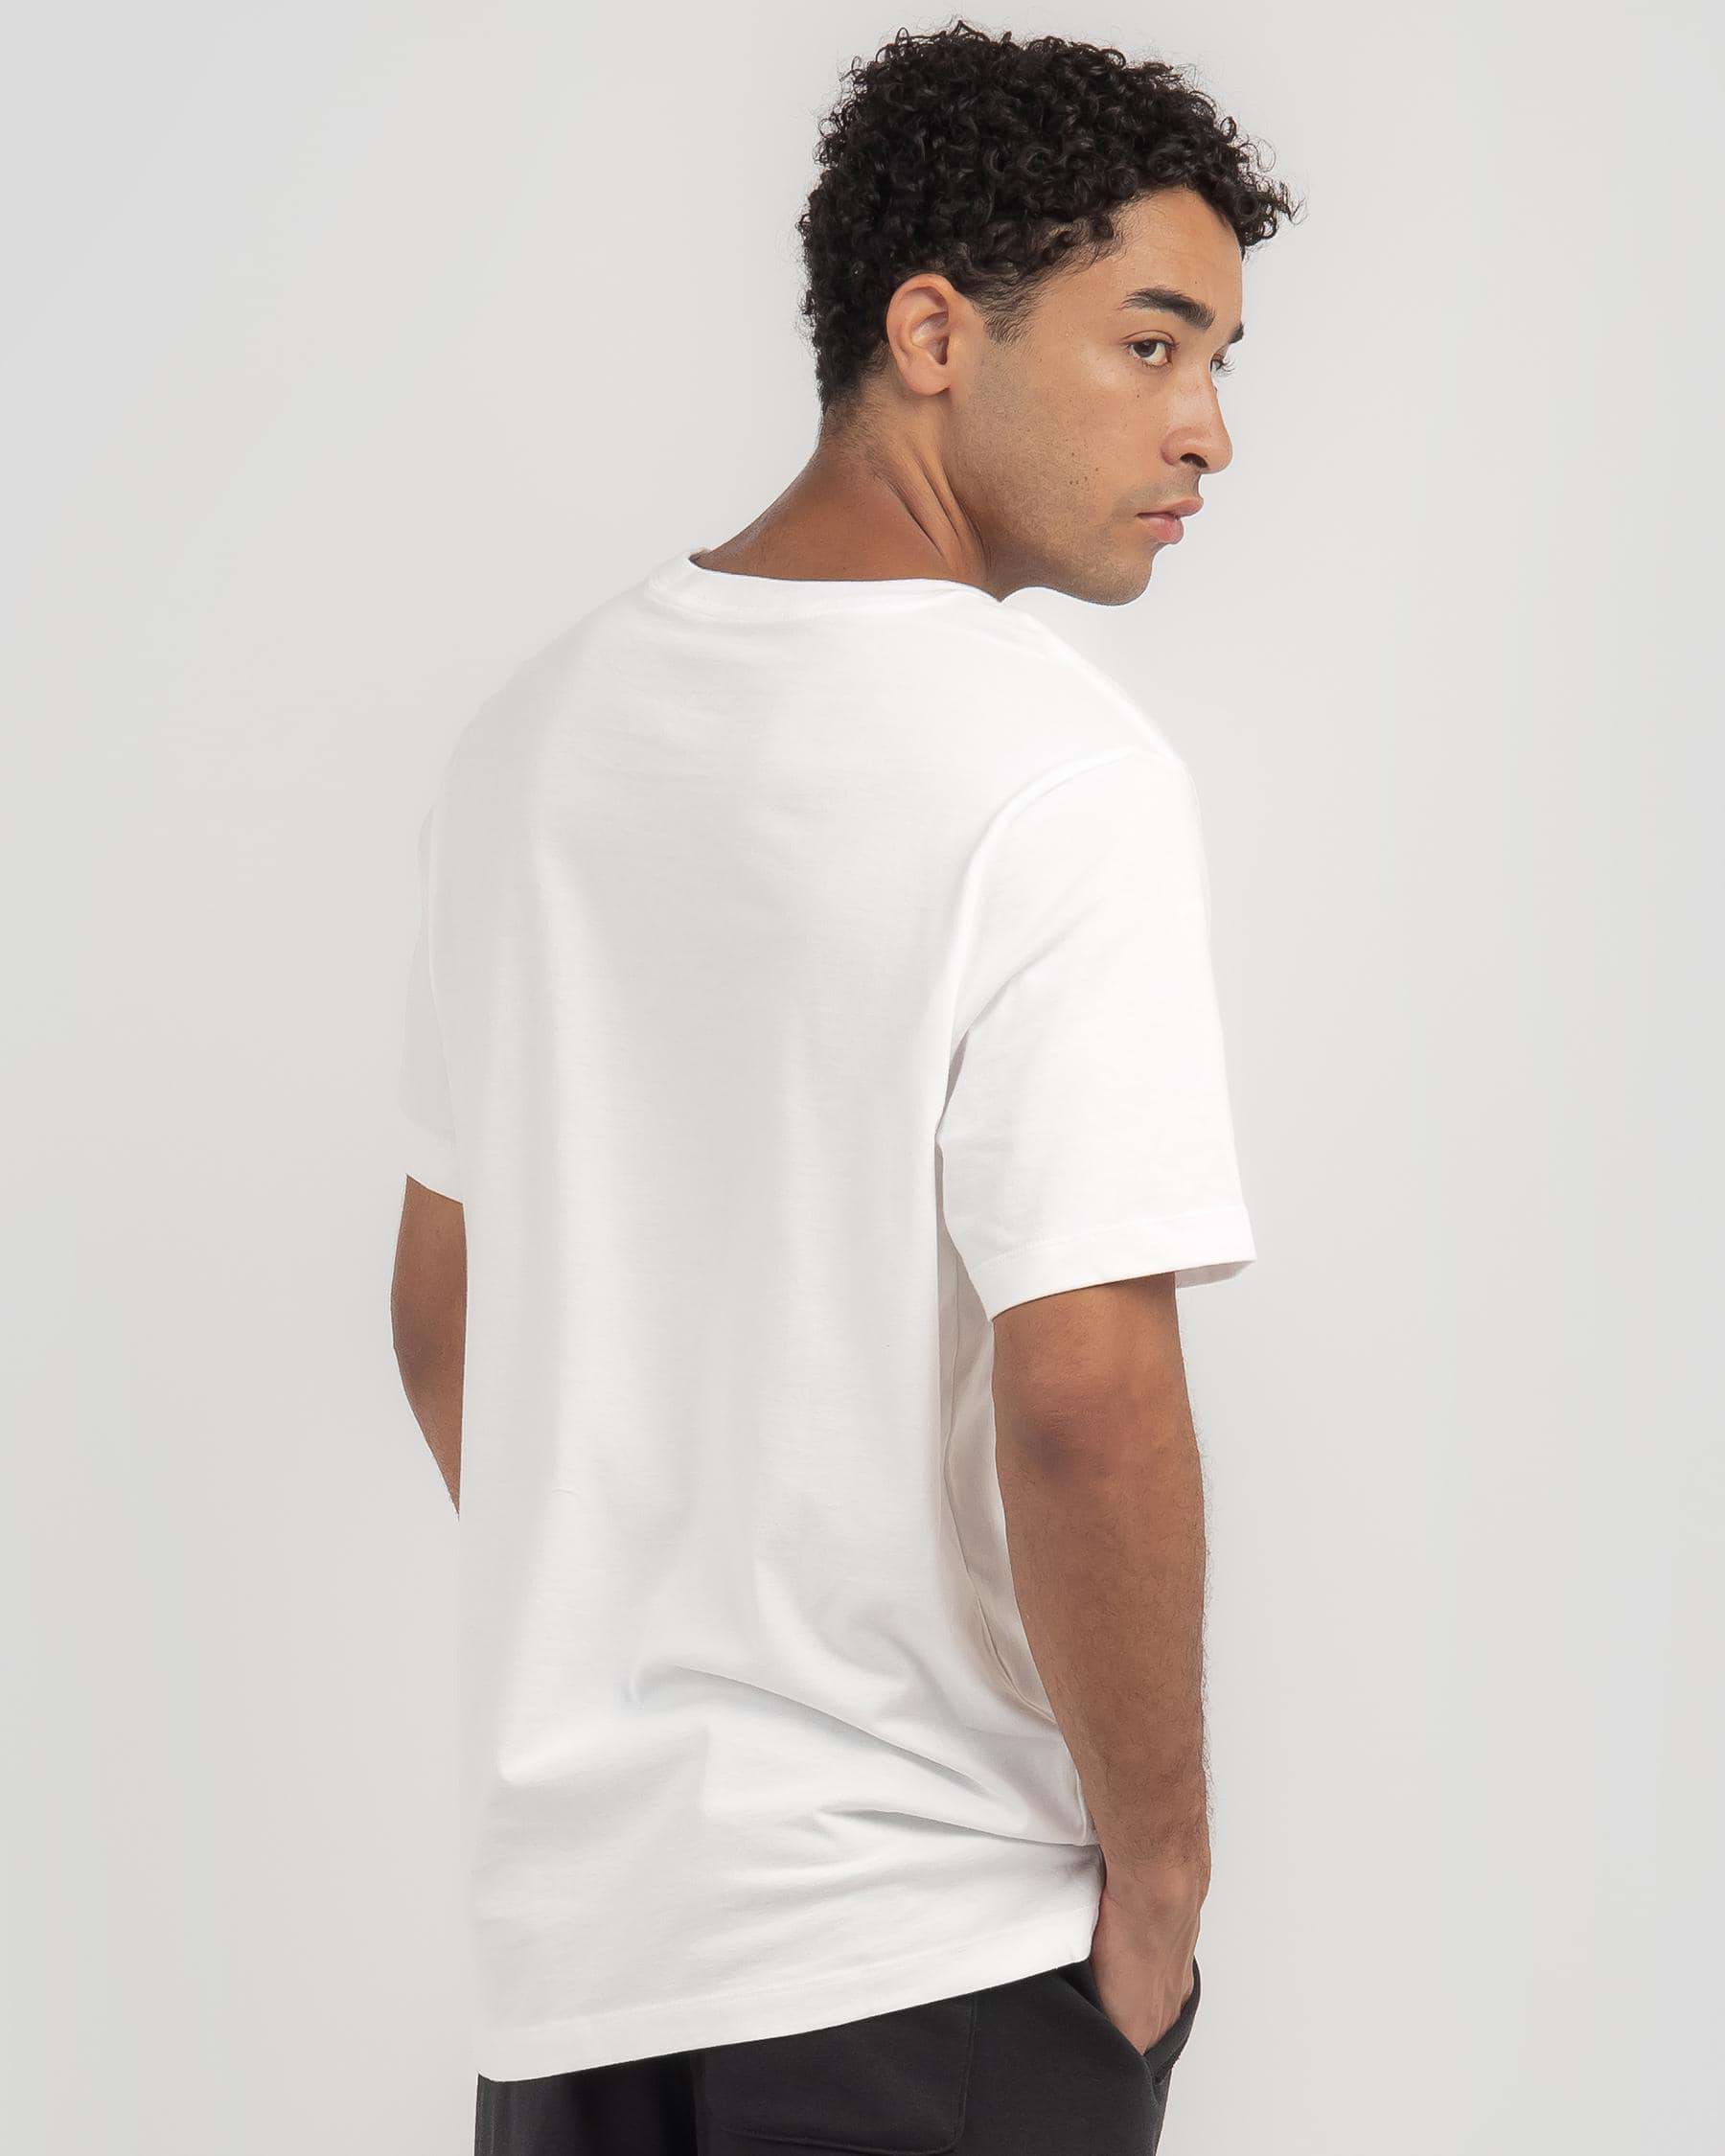 Shop Nike Sportswear Club T-Shirt In White/ Black - Fast Shipping ...